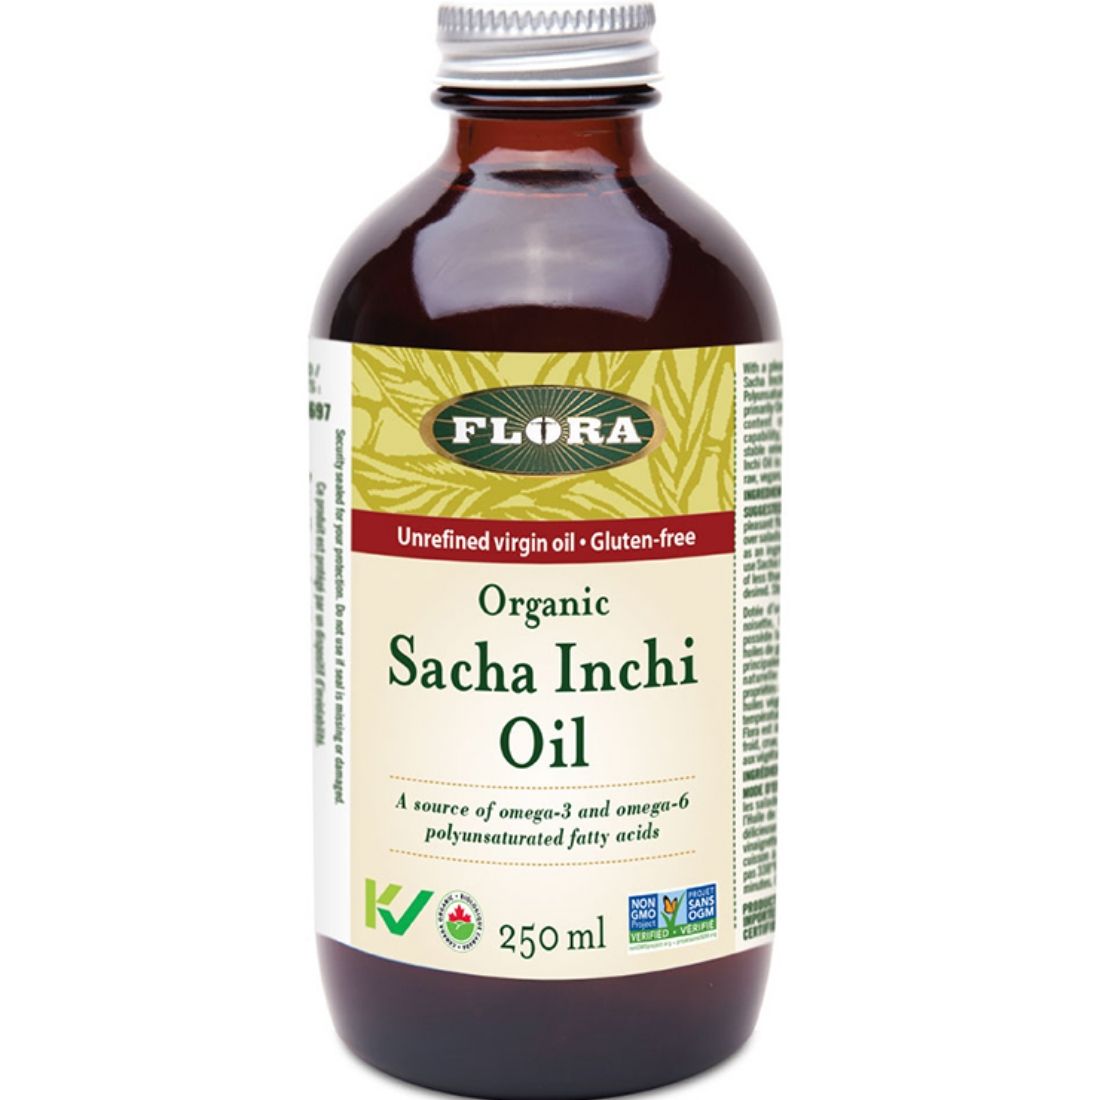 Flora Organic Sacha Inchi Oil, Peruvian, 250ml